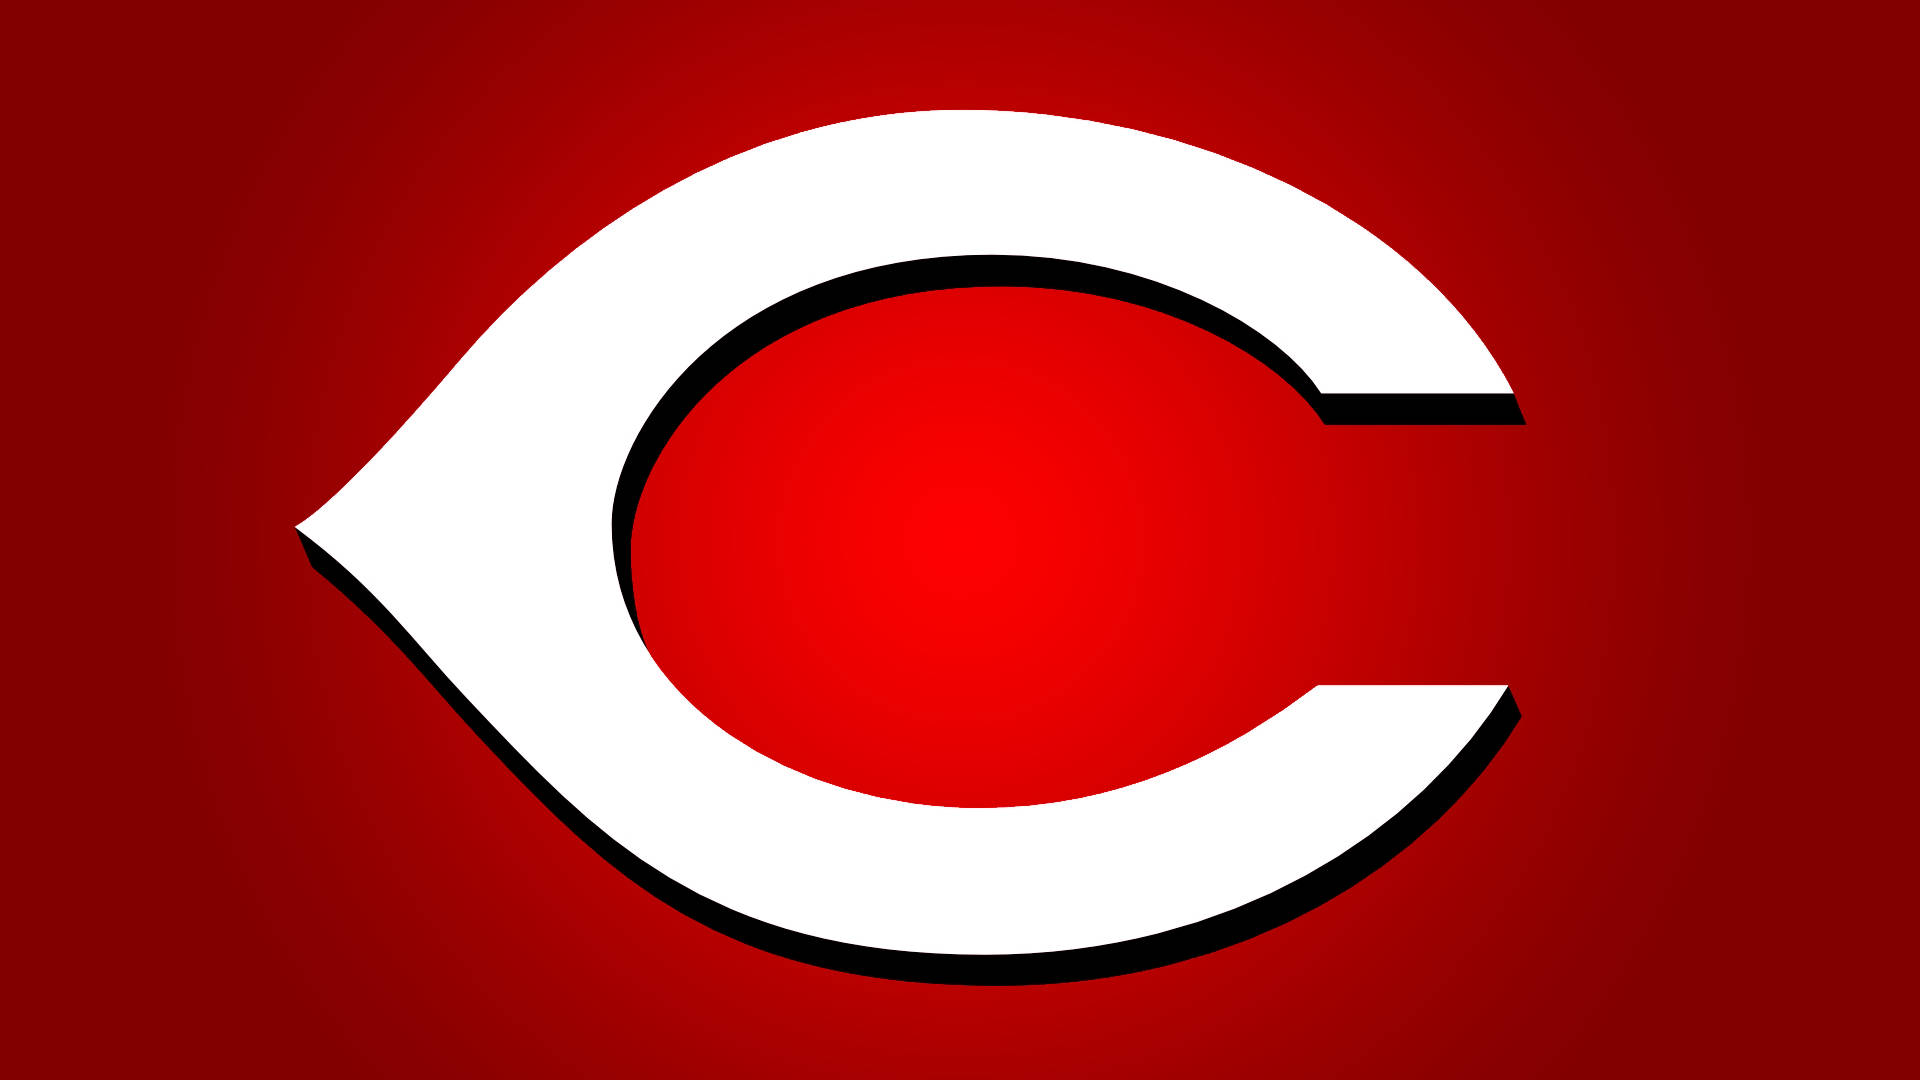 Classic Red Logo For Cincinnati Reds Background